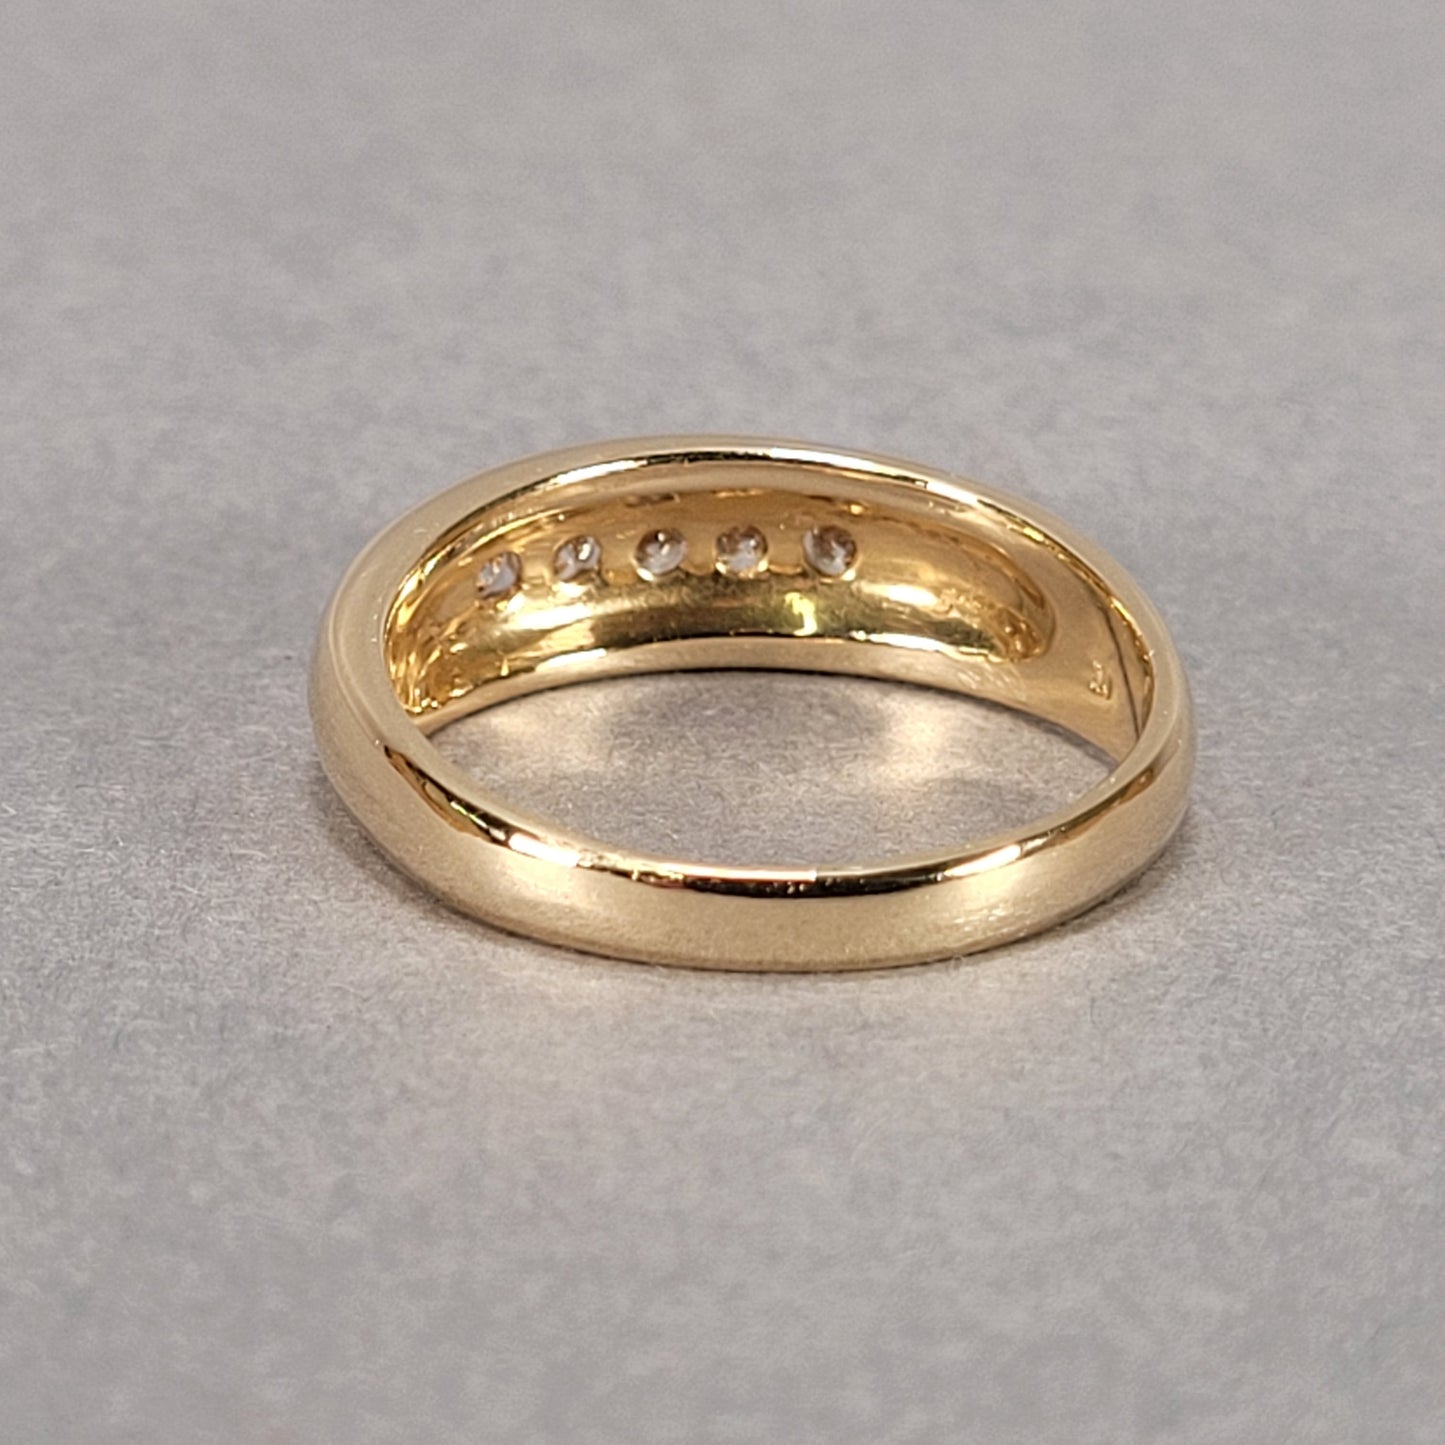 Men's 14k Yellow Gold Ring With Diamonds 7g